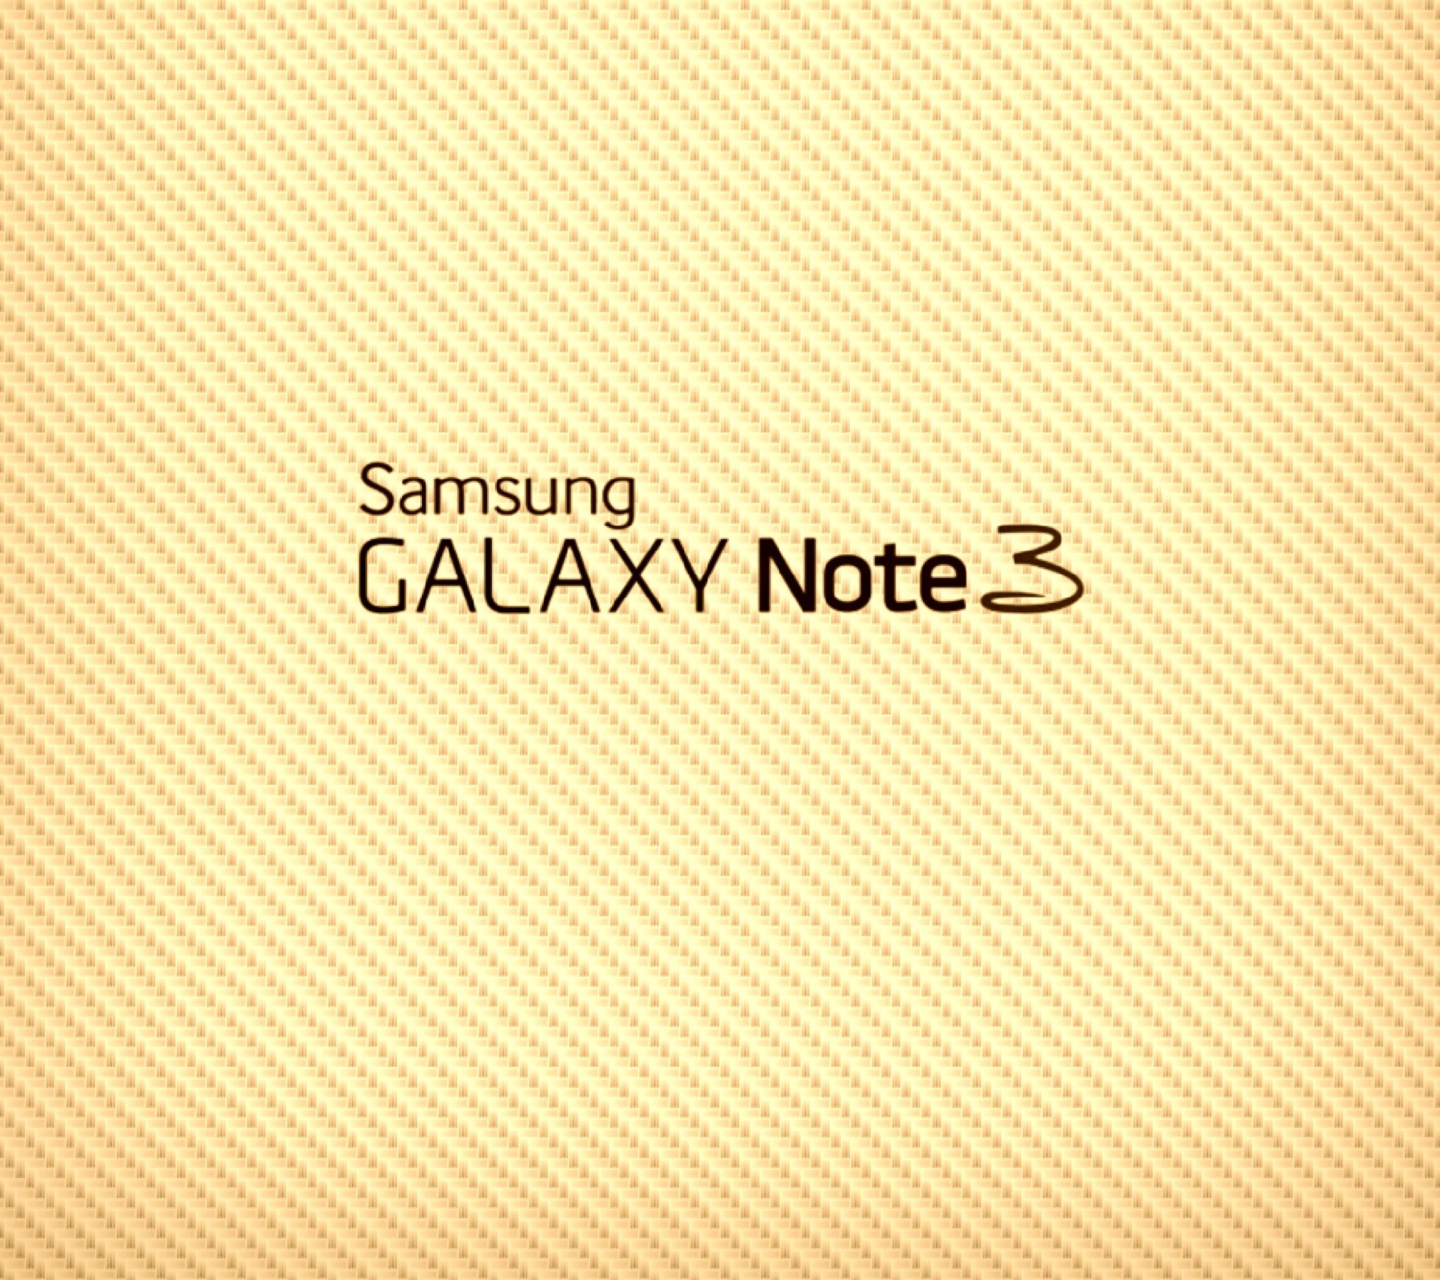 Samsung Galaxy Note 3 Gold wallpaper 1440x1280